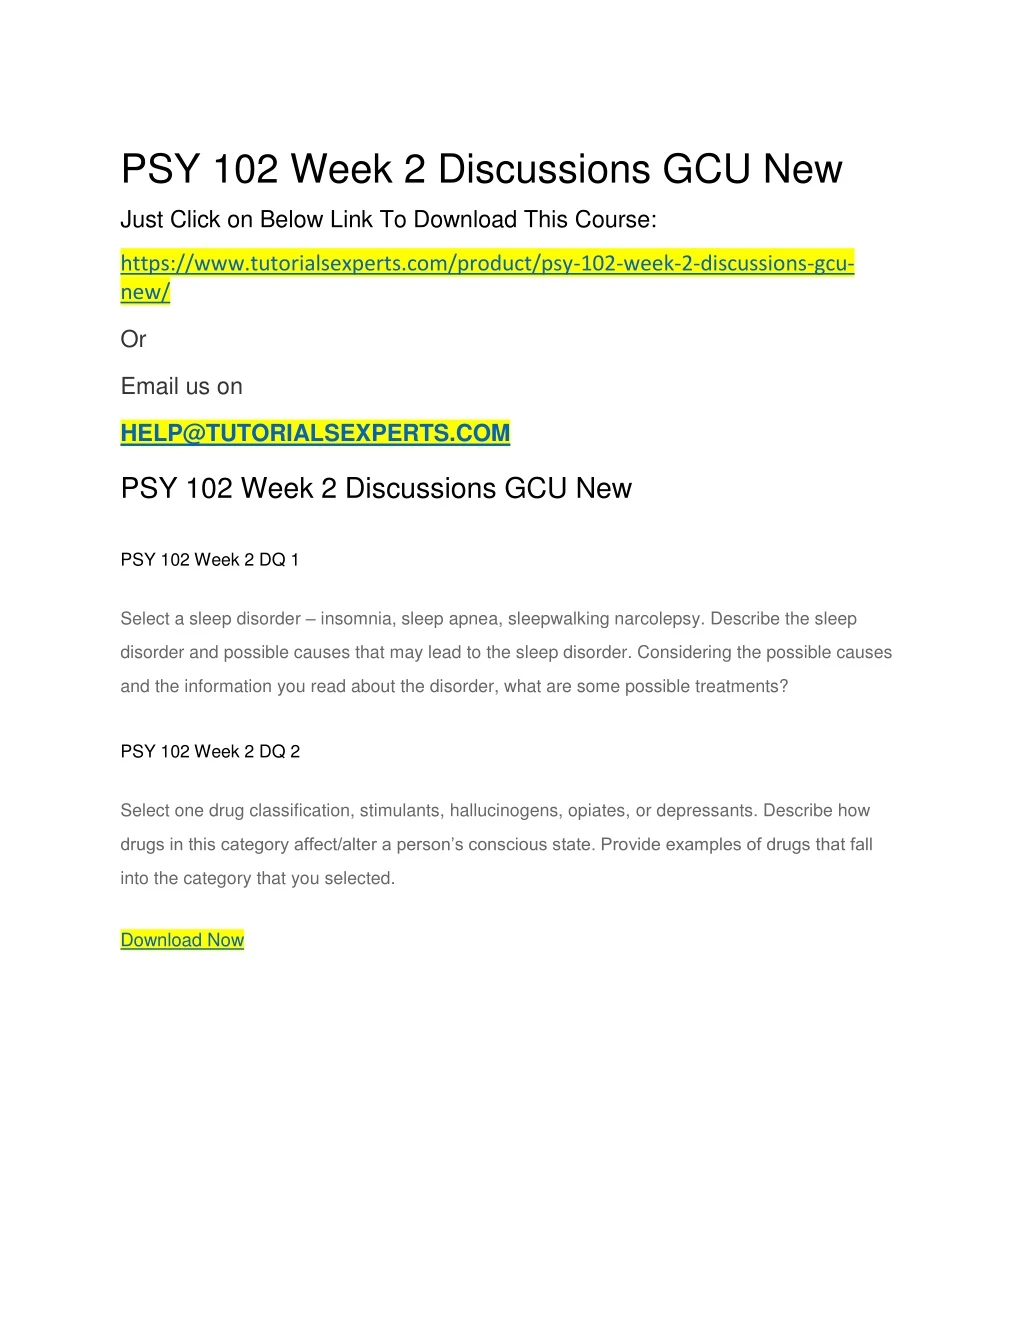 psy 102 week 2 discussions gcu new